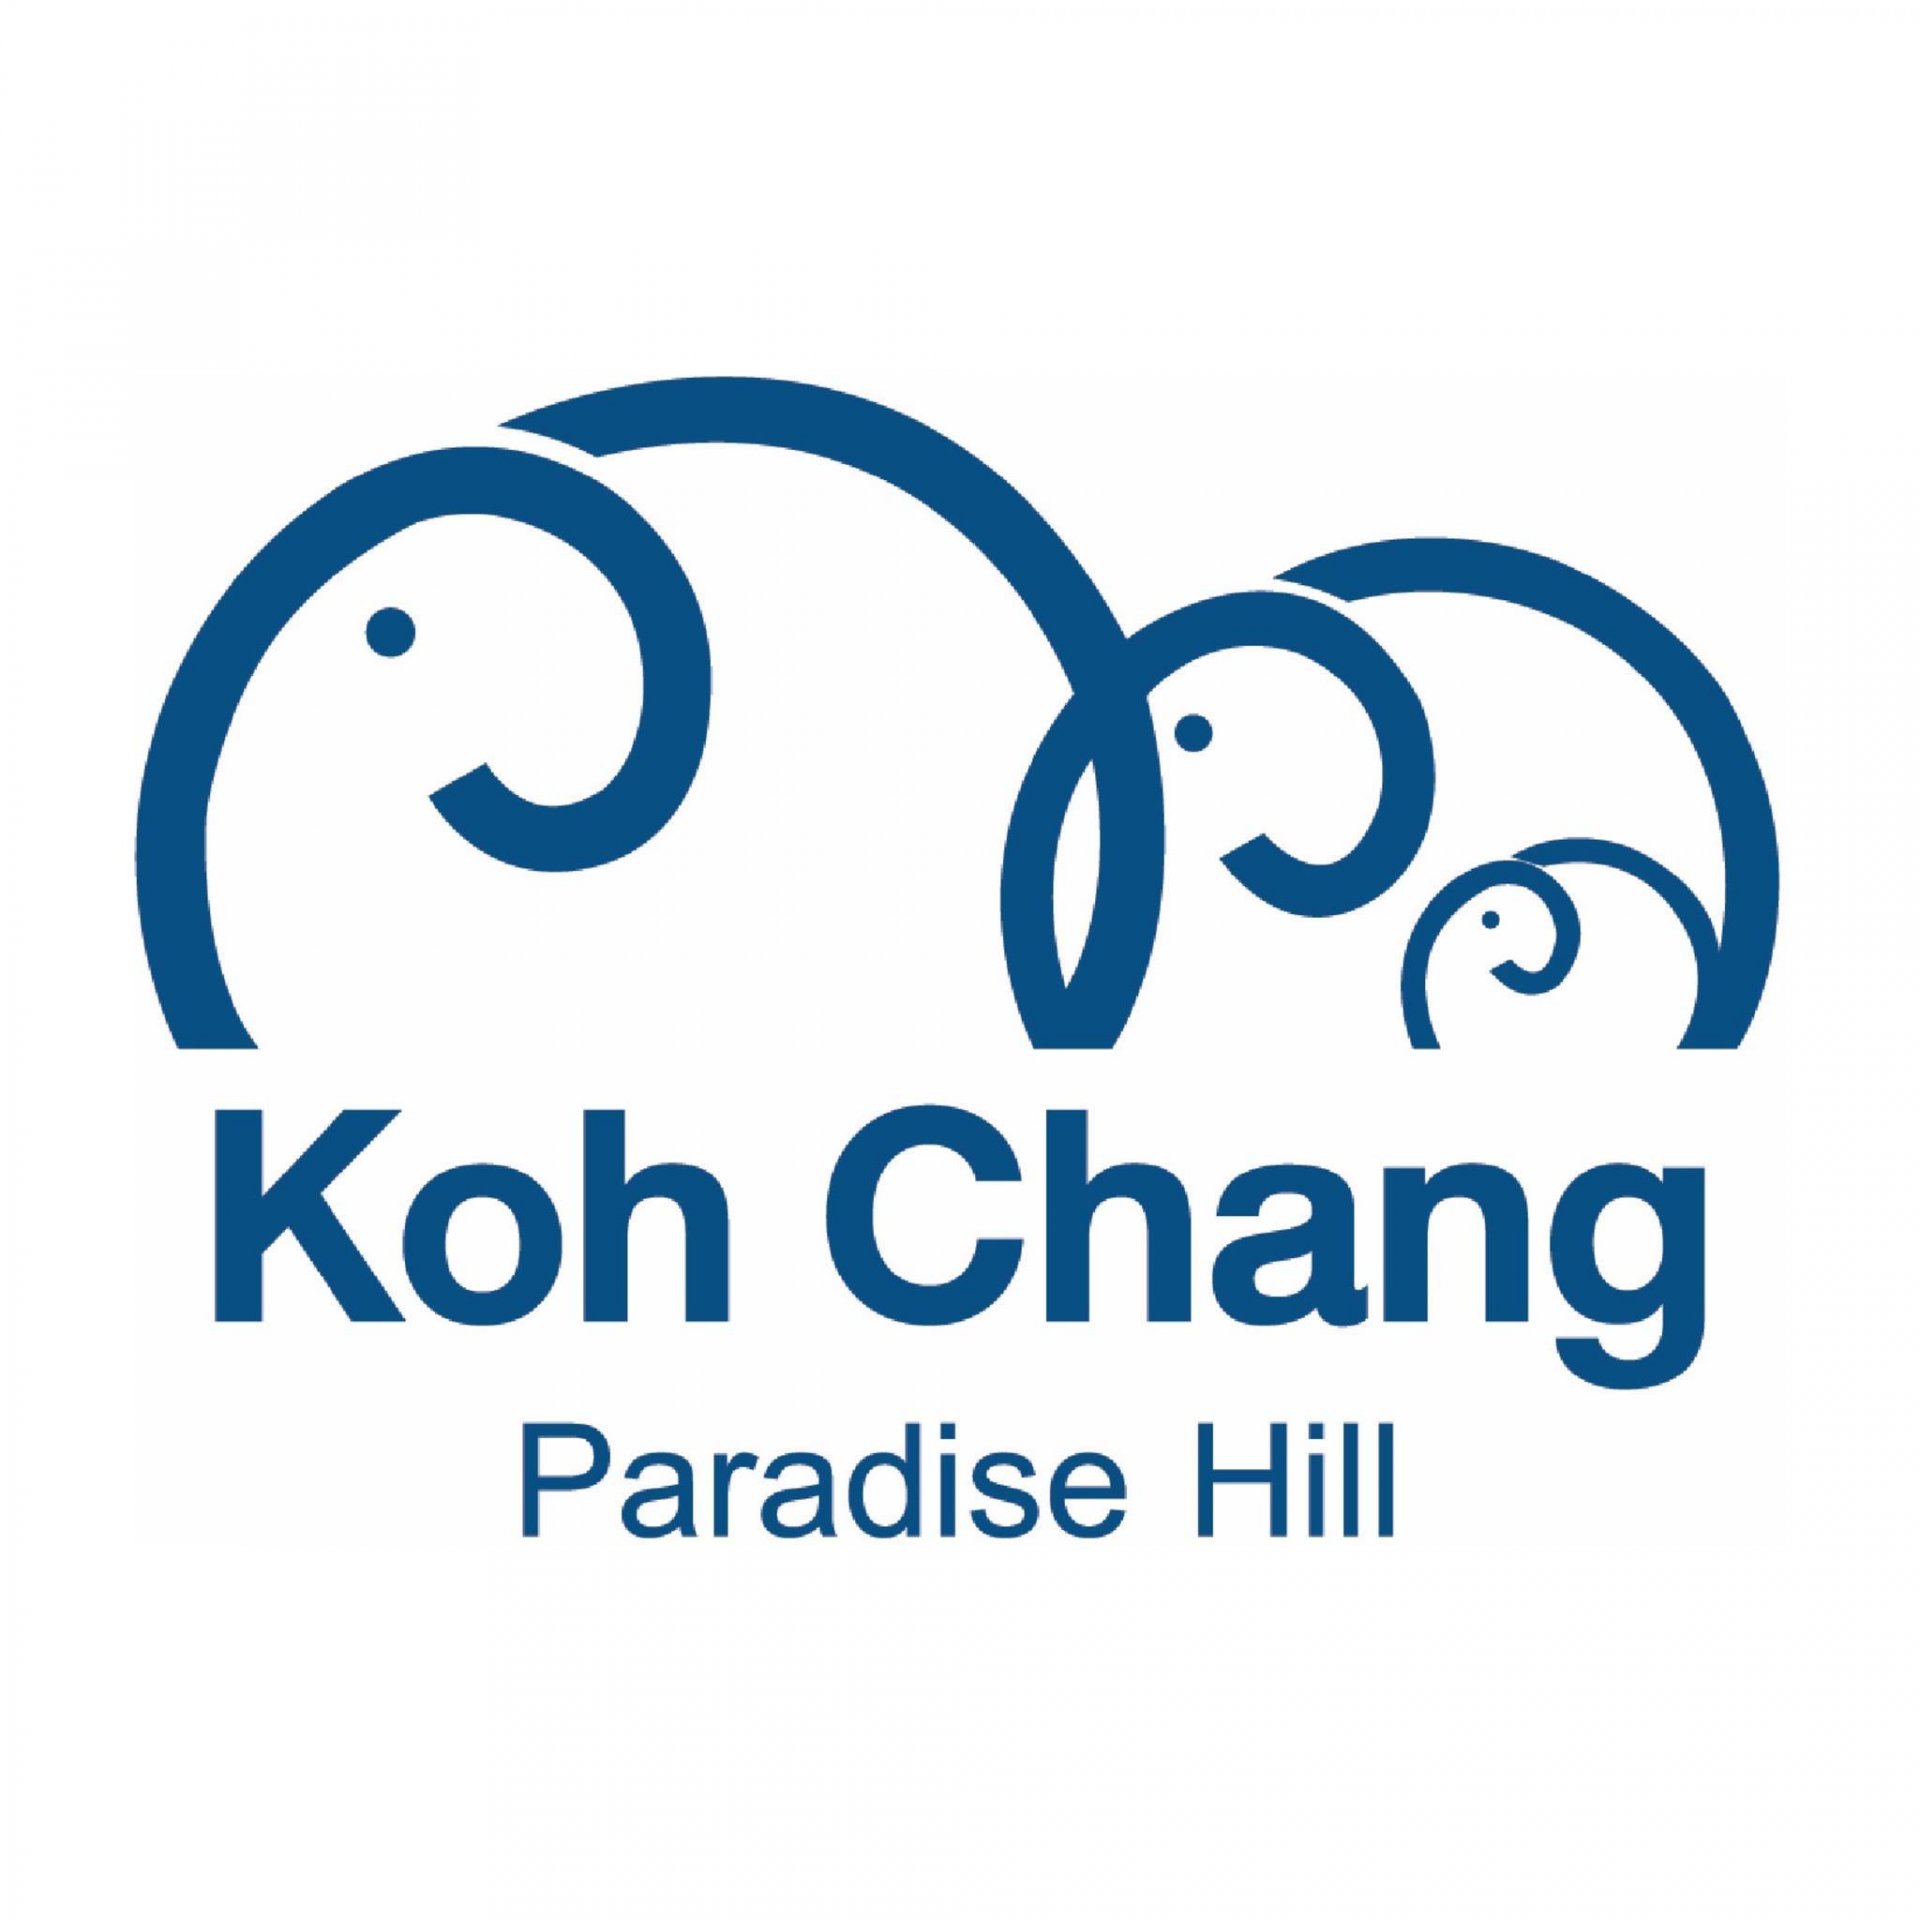 Koh Chang Paradise Hill